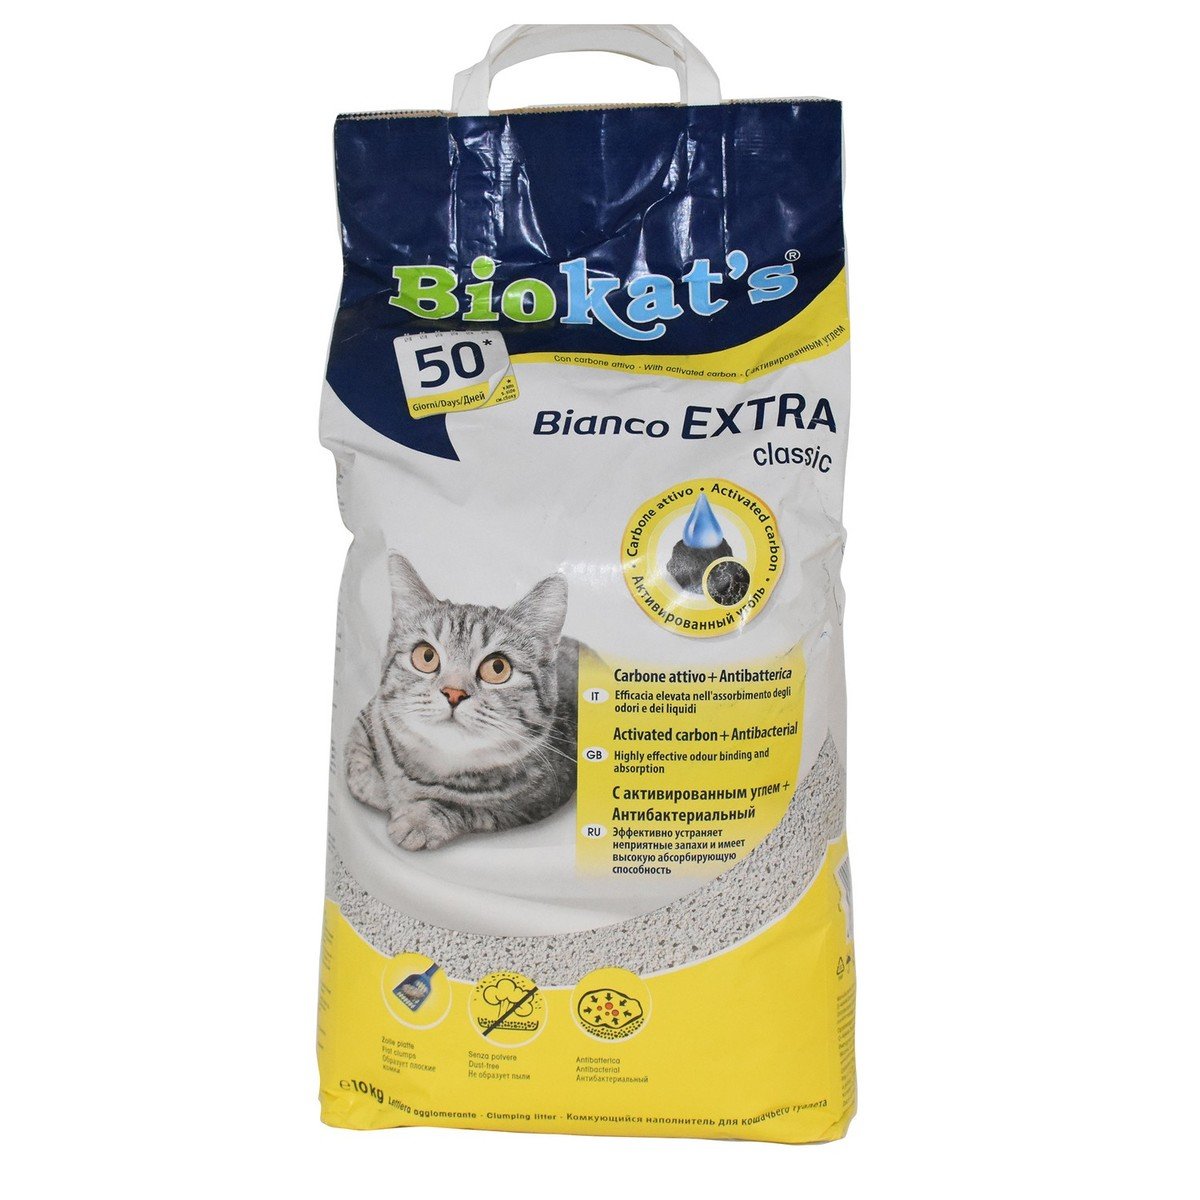 Biokats BioKat's Bianco Extra Classic Cat Litter 10kg